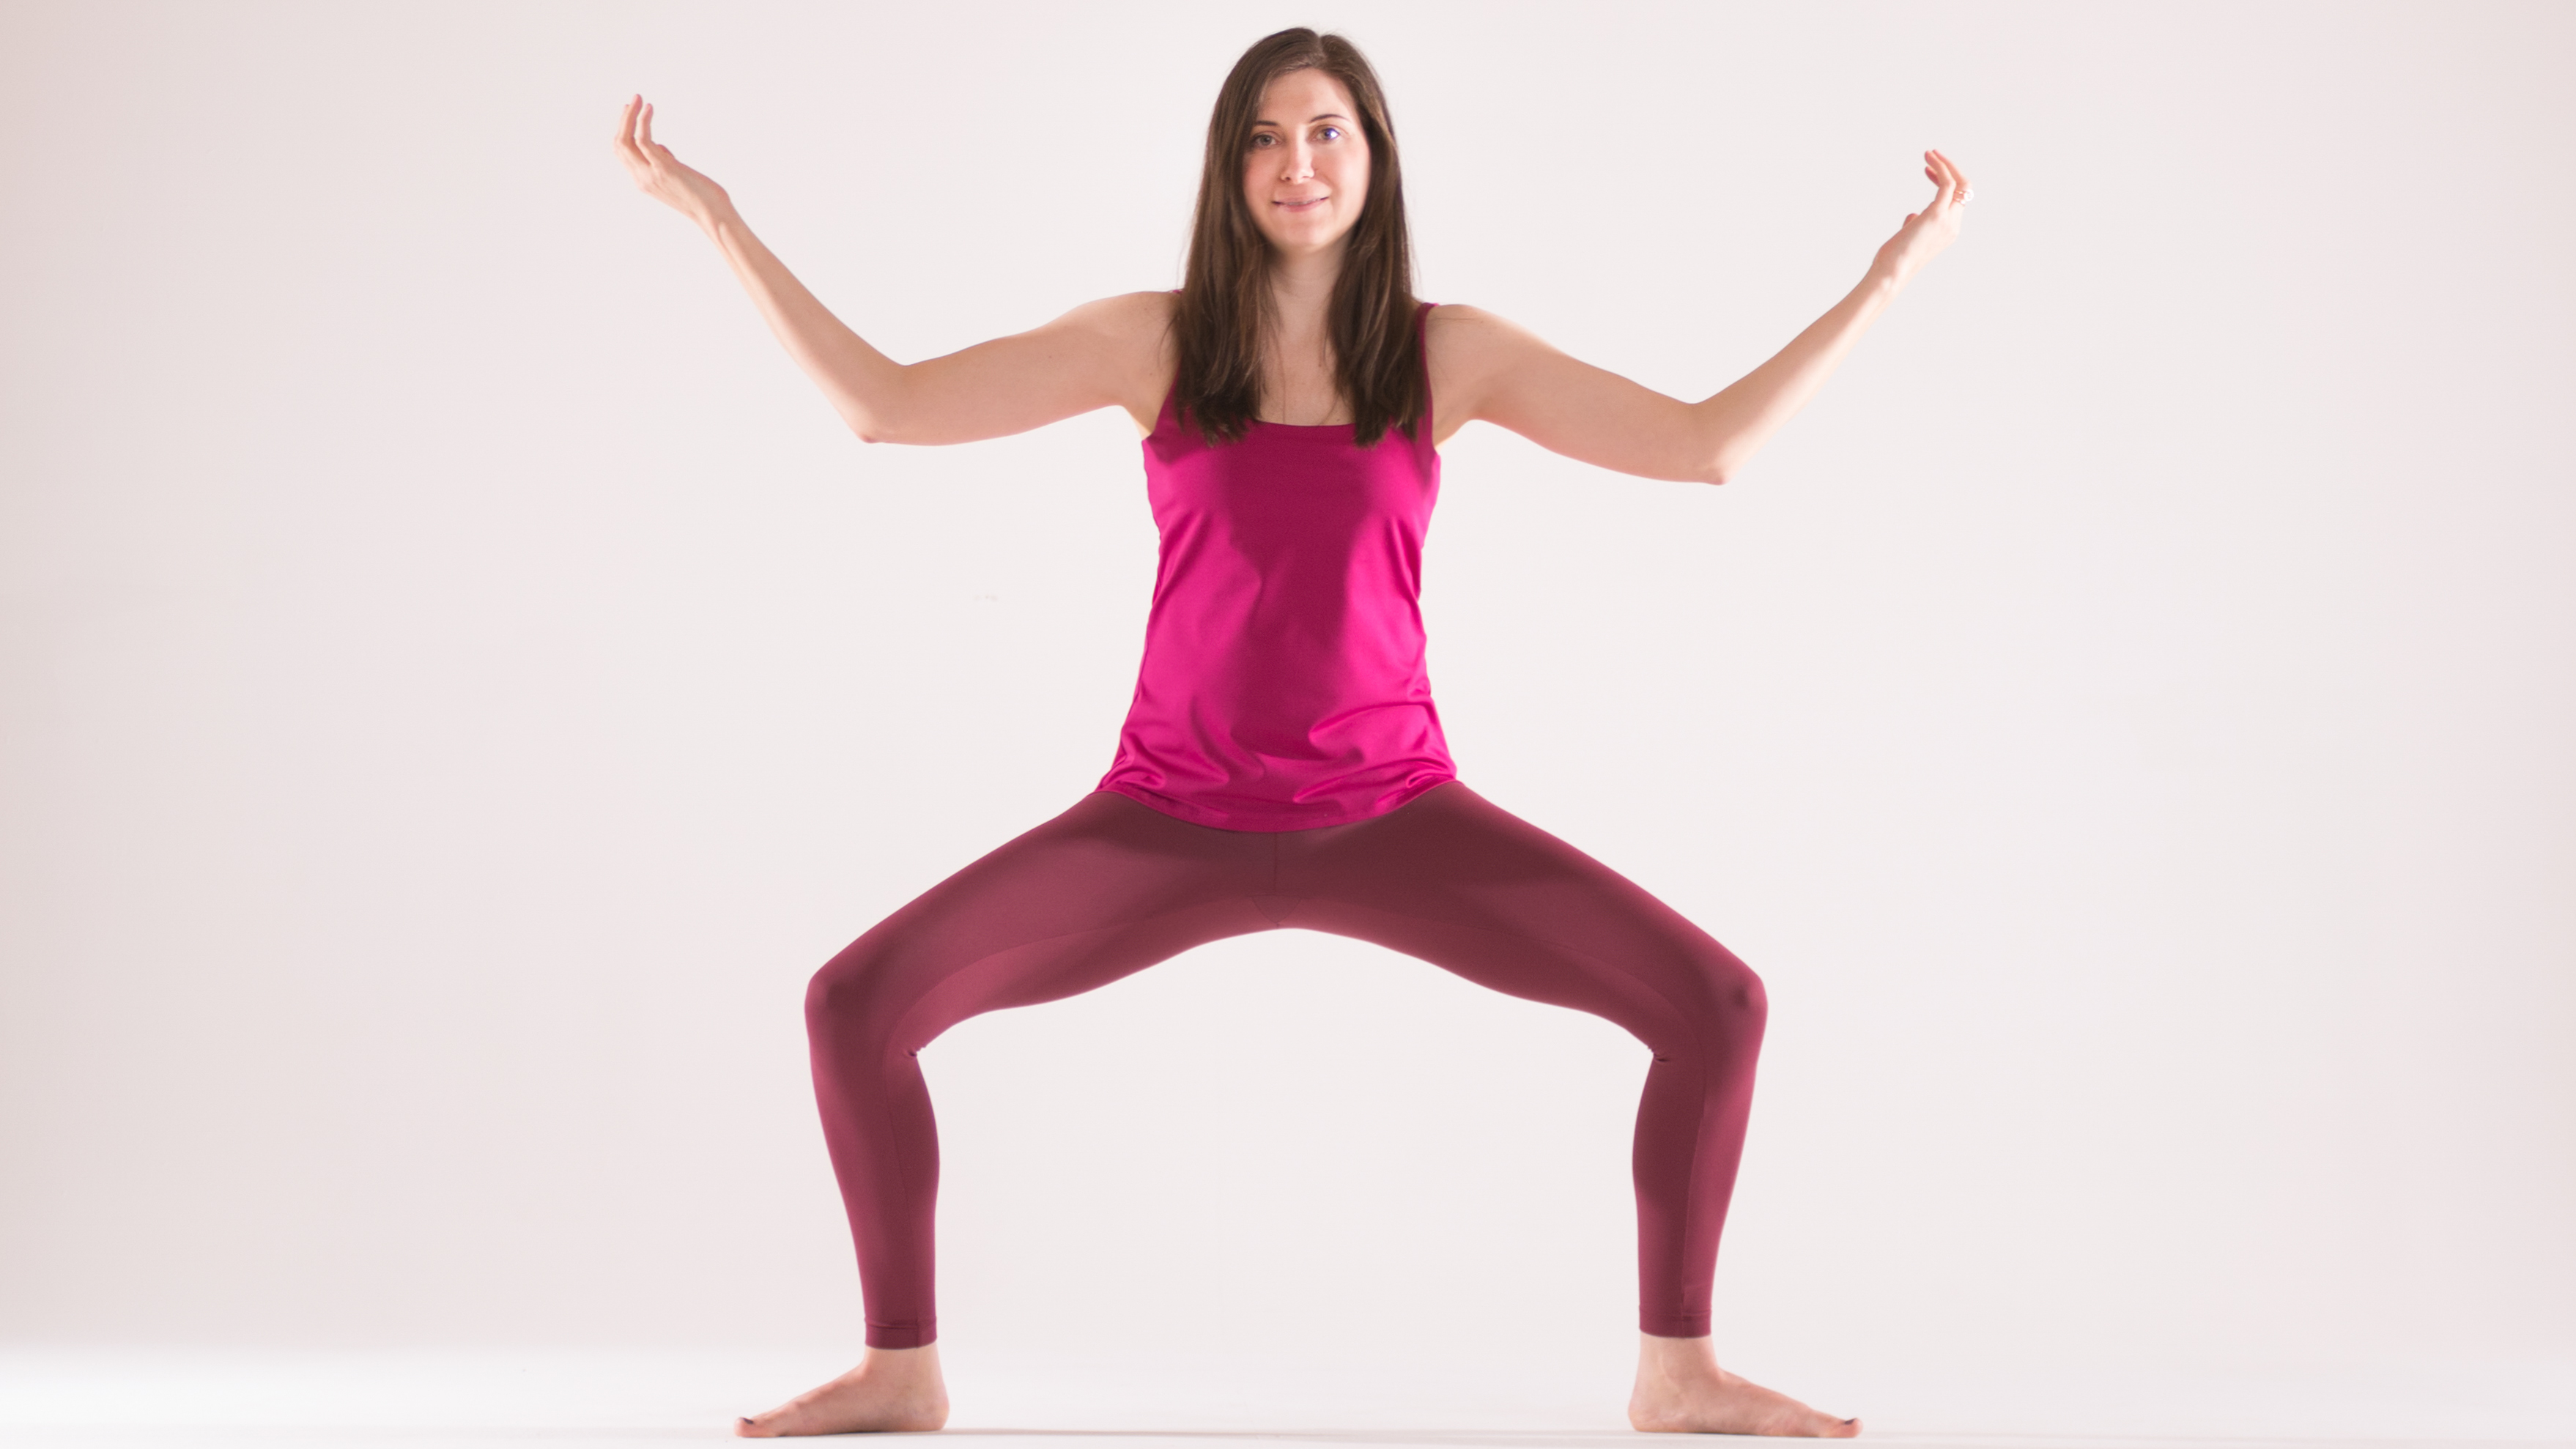 Safe Prenatal Yoga Poses for Each Trimester